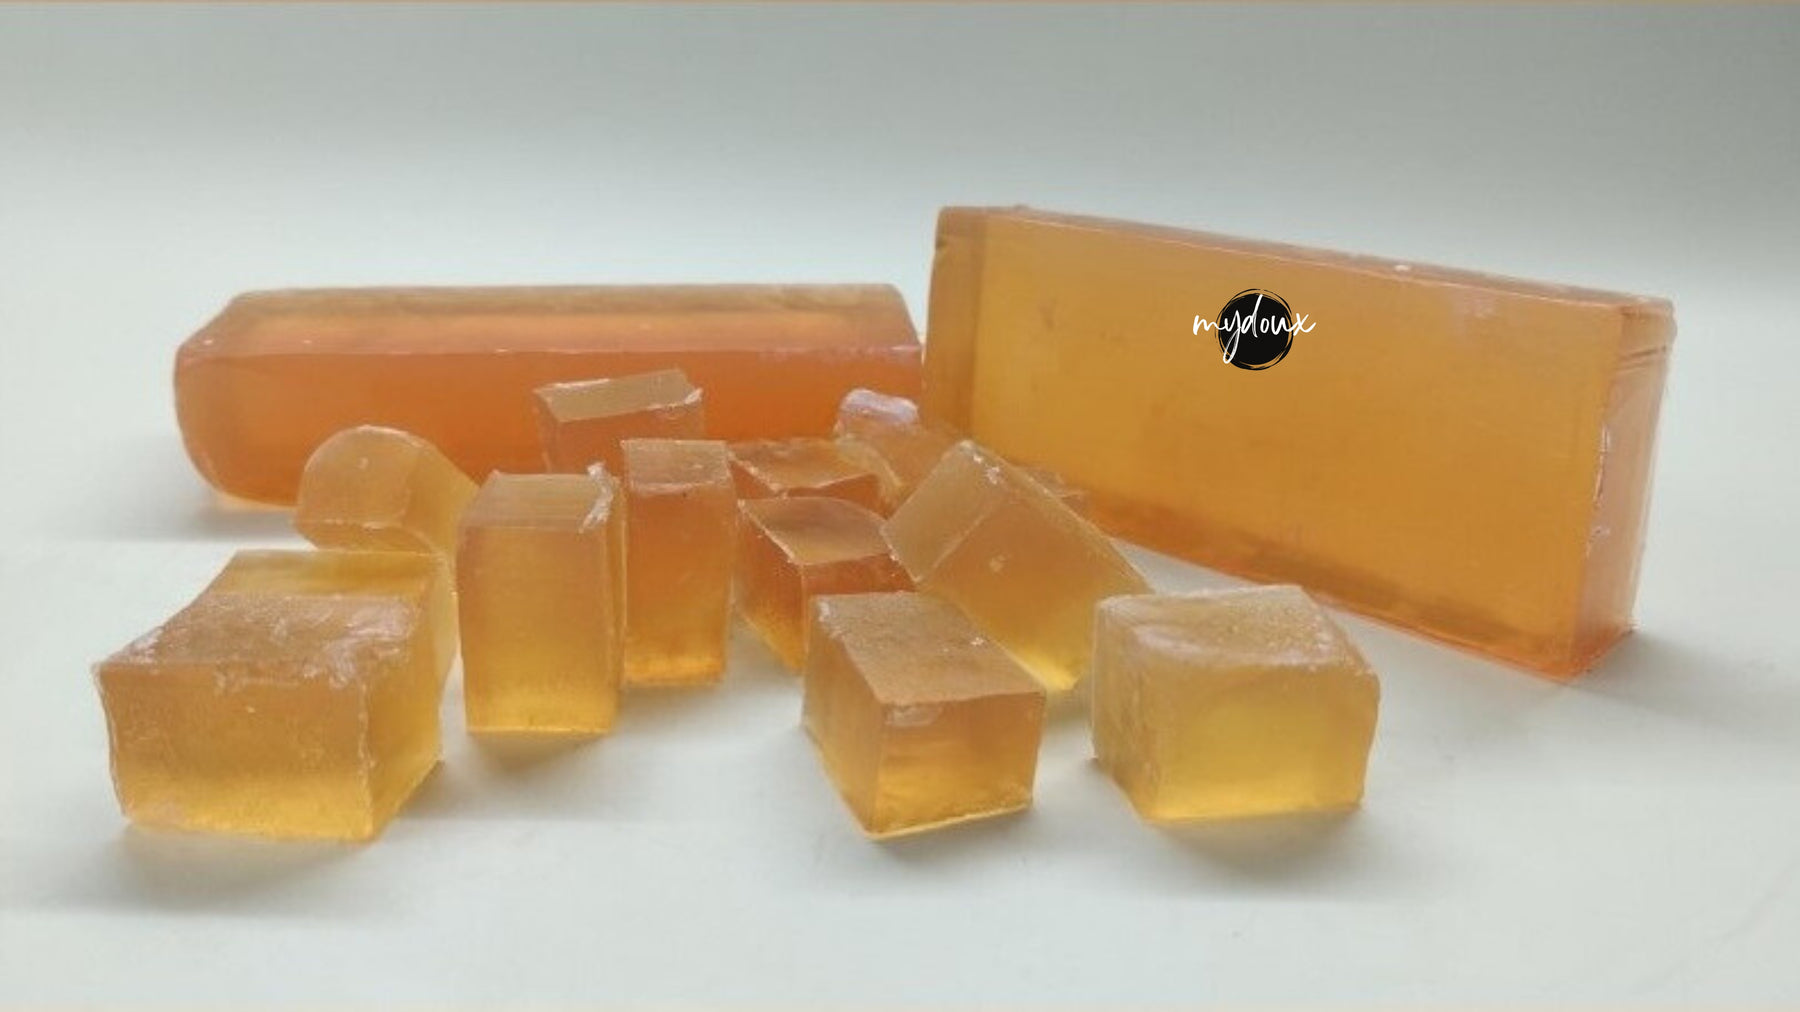 Honey Soap Base-1 kg